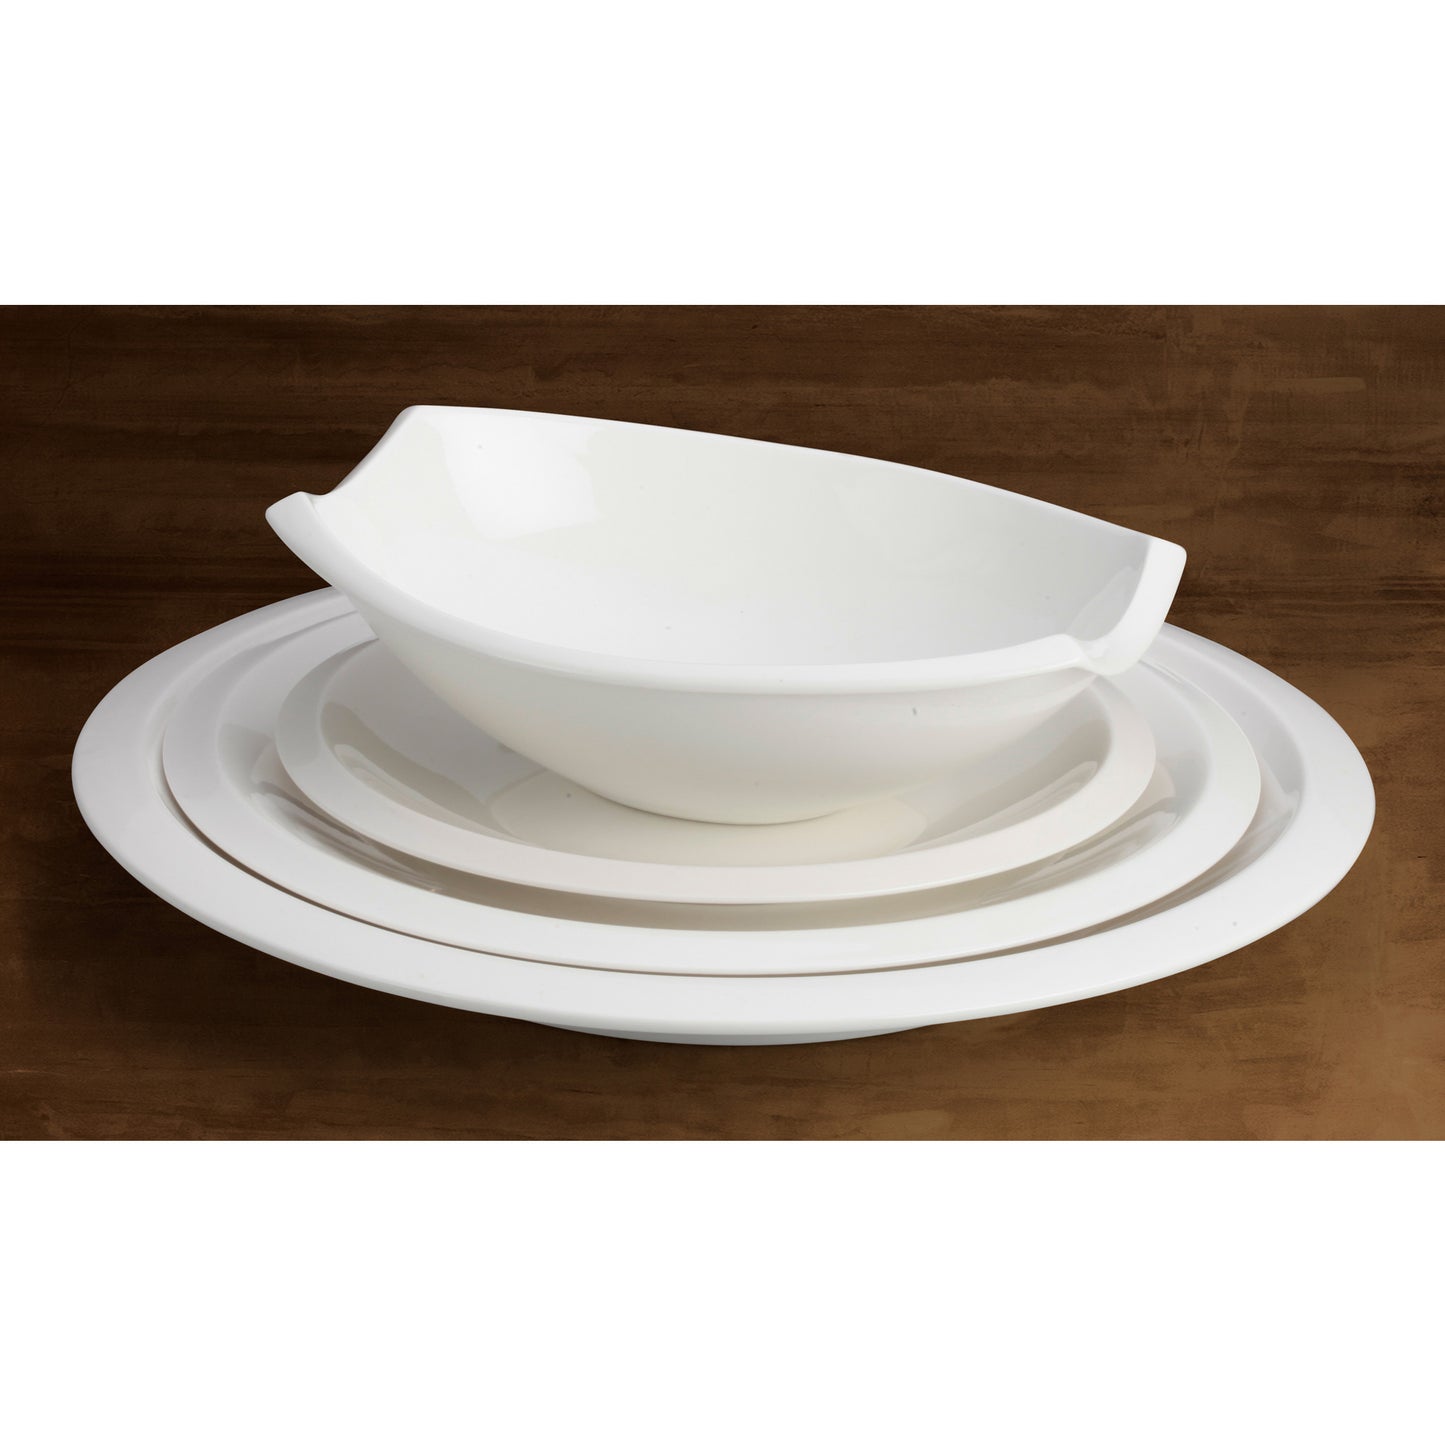 WDP006-205 - 11" Porcelain Oval Bowl, Creamy White, 12 pcs/case